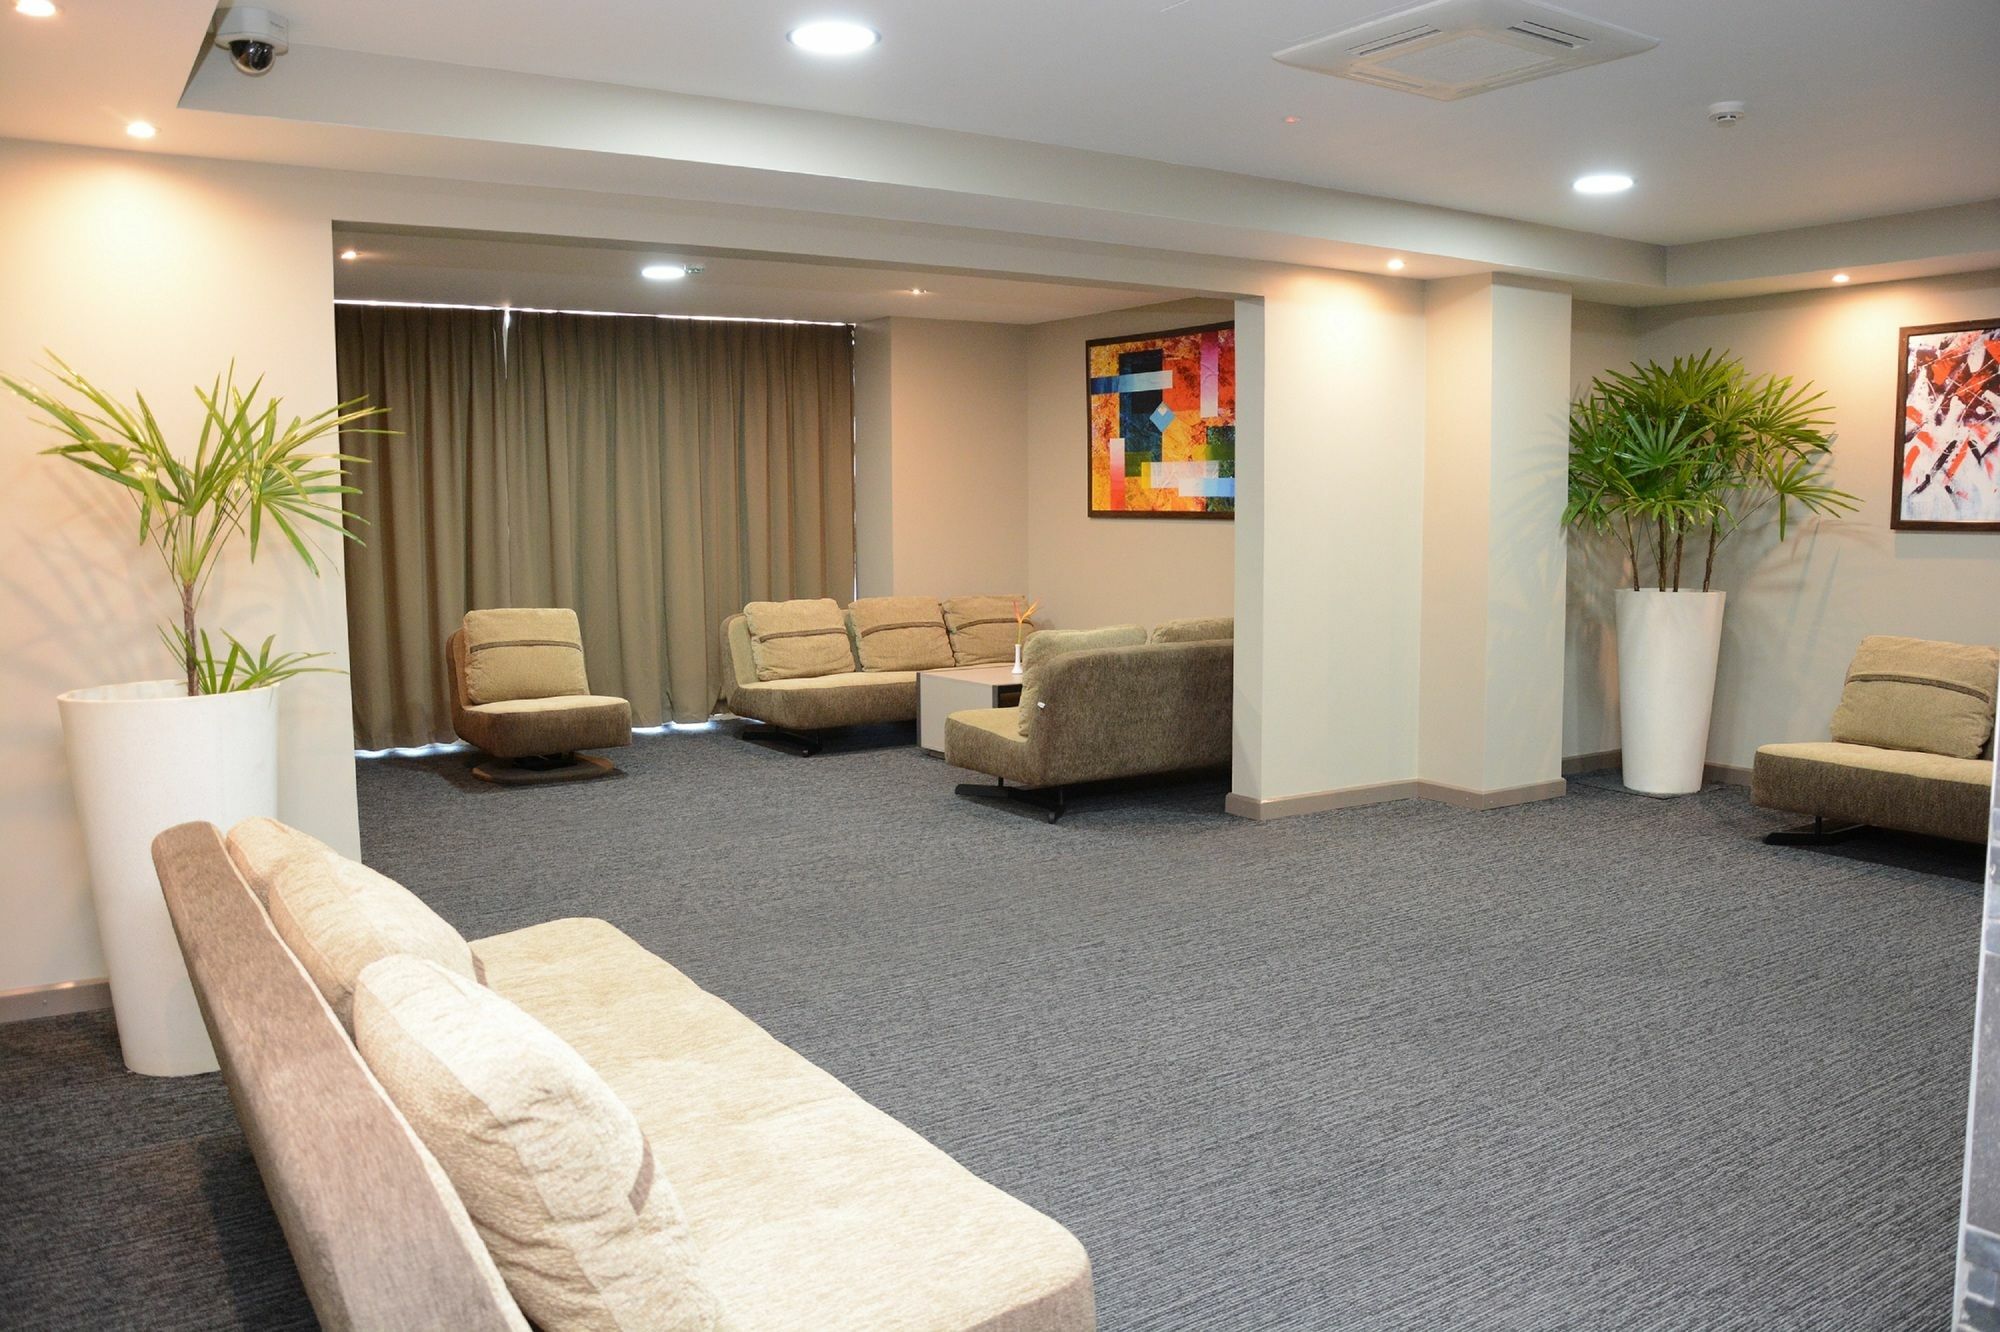 Ratsun Nadi Airport Apartment Hotel Exteriör bild